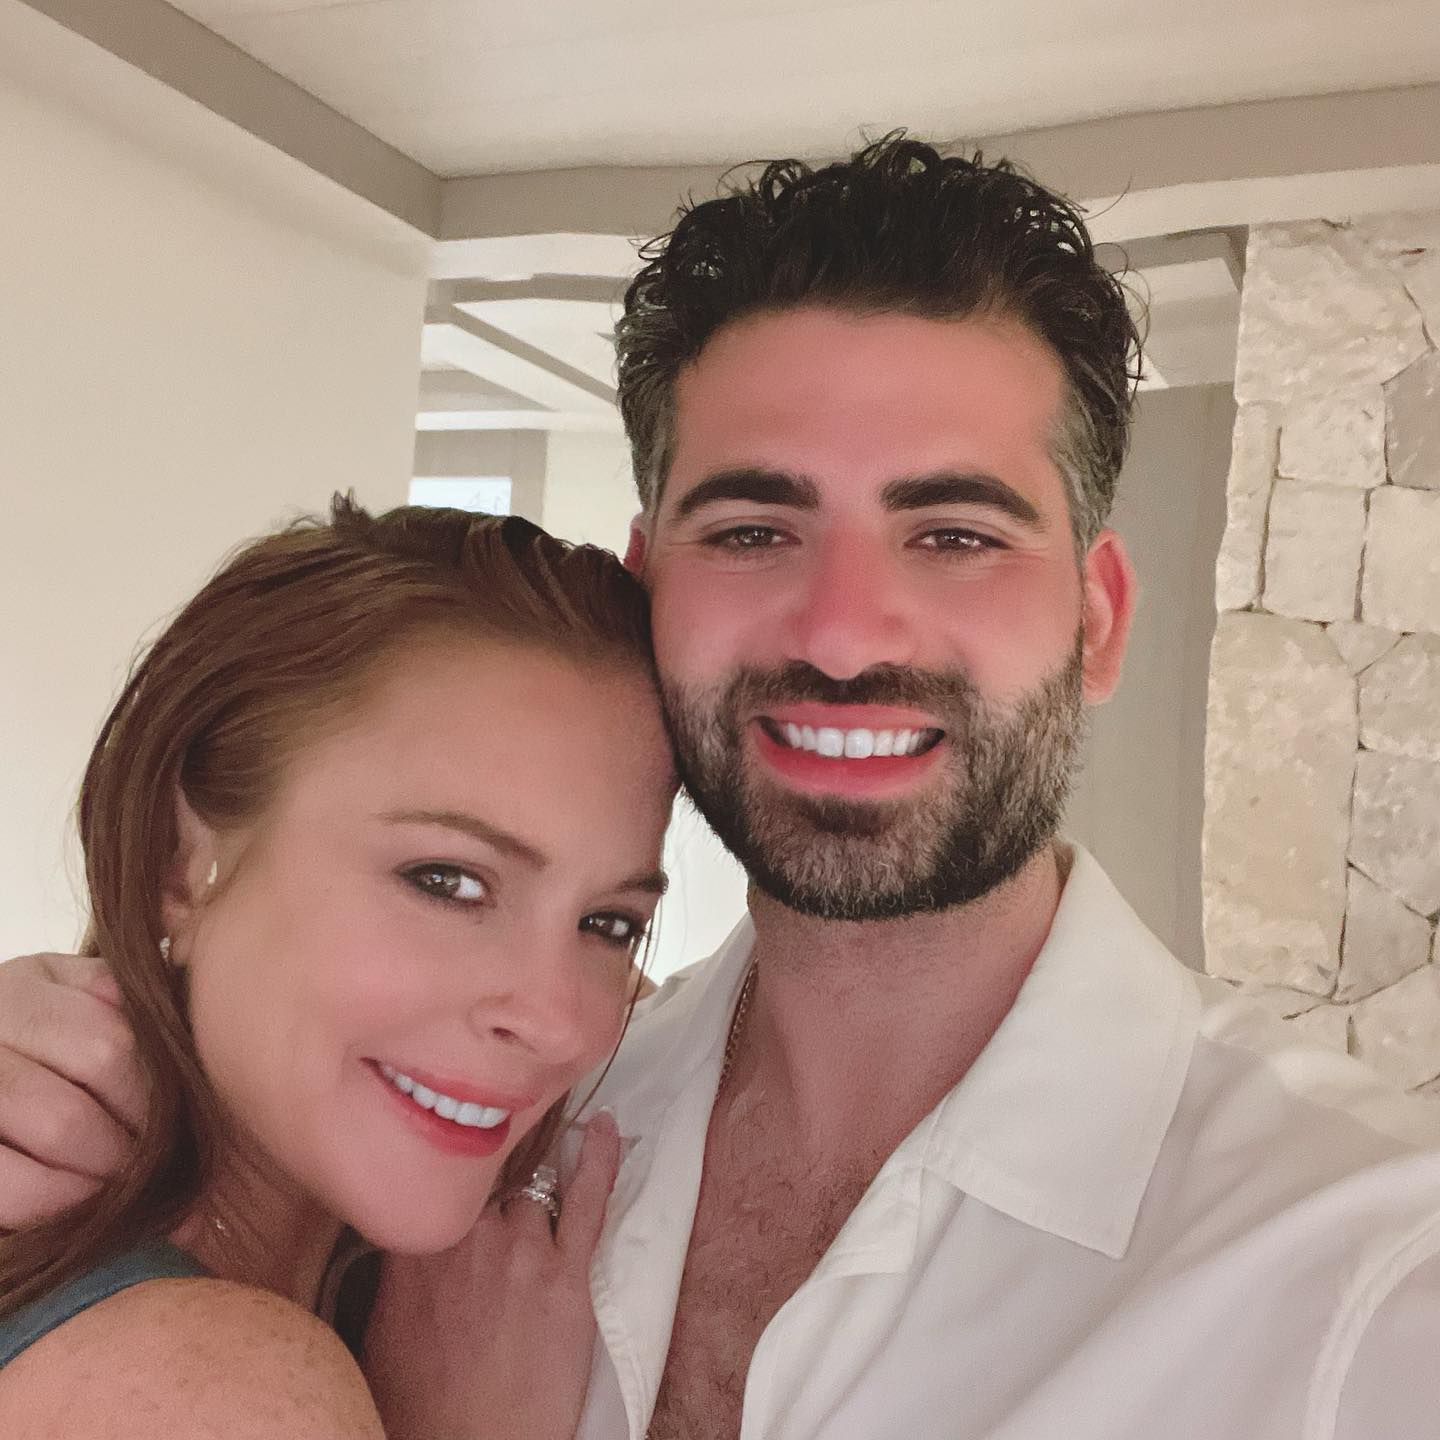 Lindsay Lohan and fiancé Bader Shammas